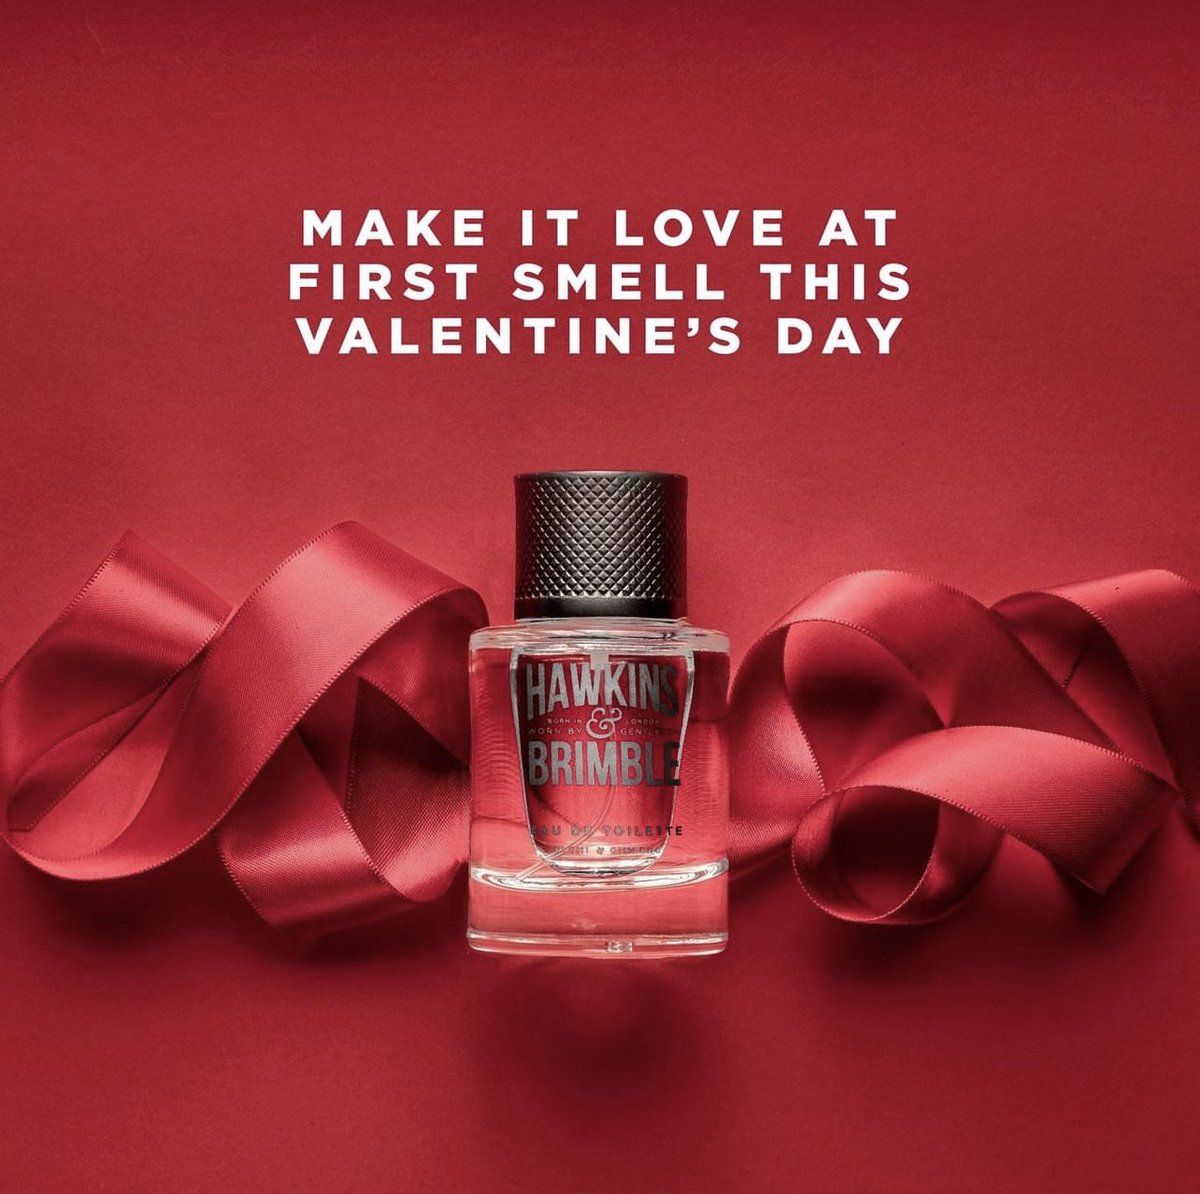 Love at first smell 😎

#HawkinsAndBrimblegr #IconicScent #MensEauDeToilette #ValentinesDayGift #GiftsForMen #MensGift #OneBeautygr